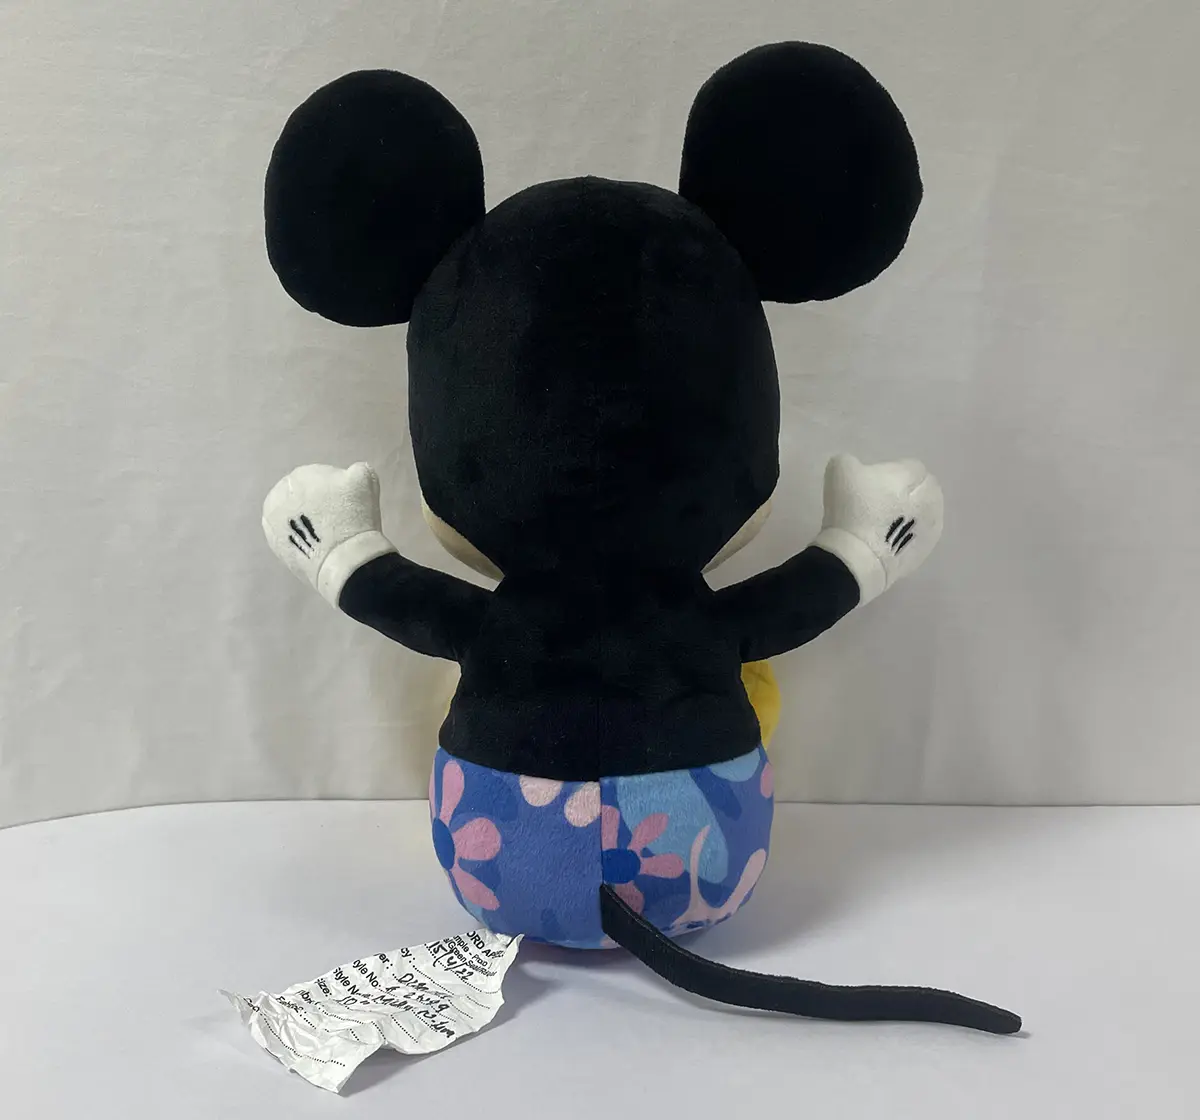 Disney Mickey Mouse Multicolour Plush Soft Toys For Girls & Boys, 2 Yrs+, 10 Inch